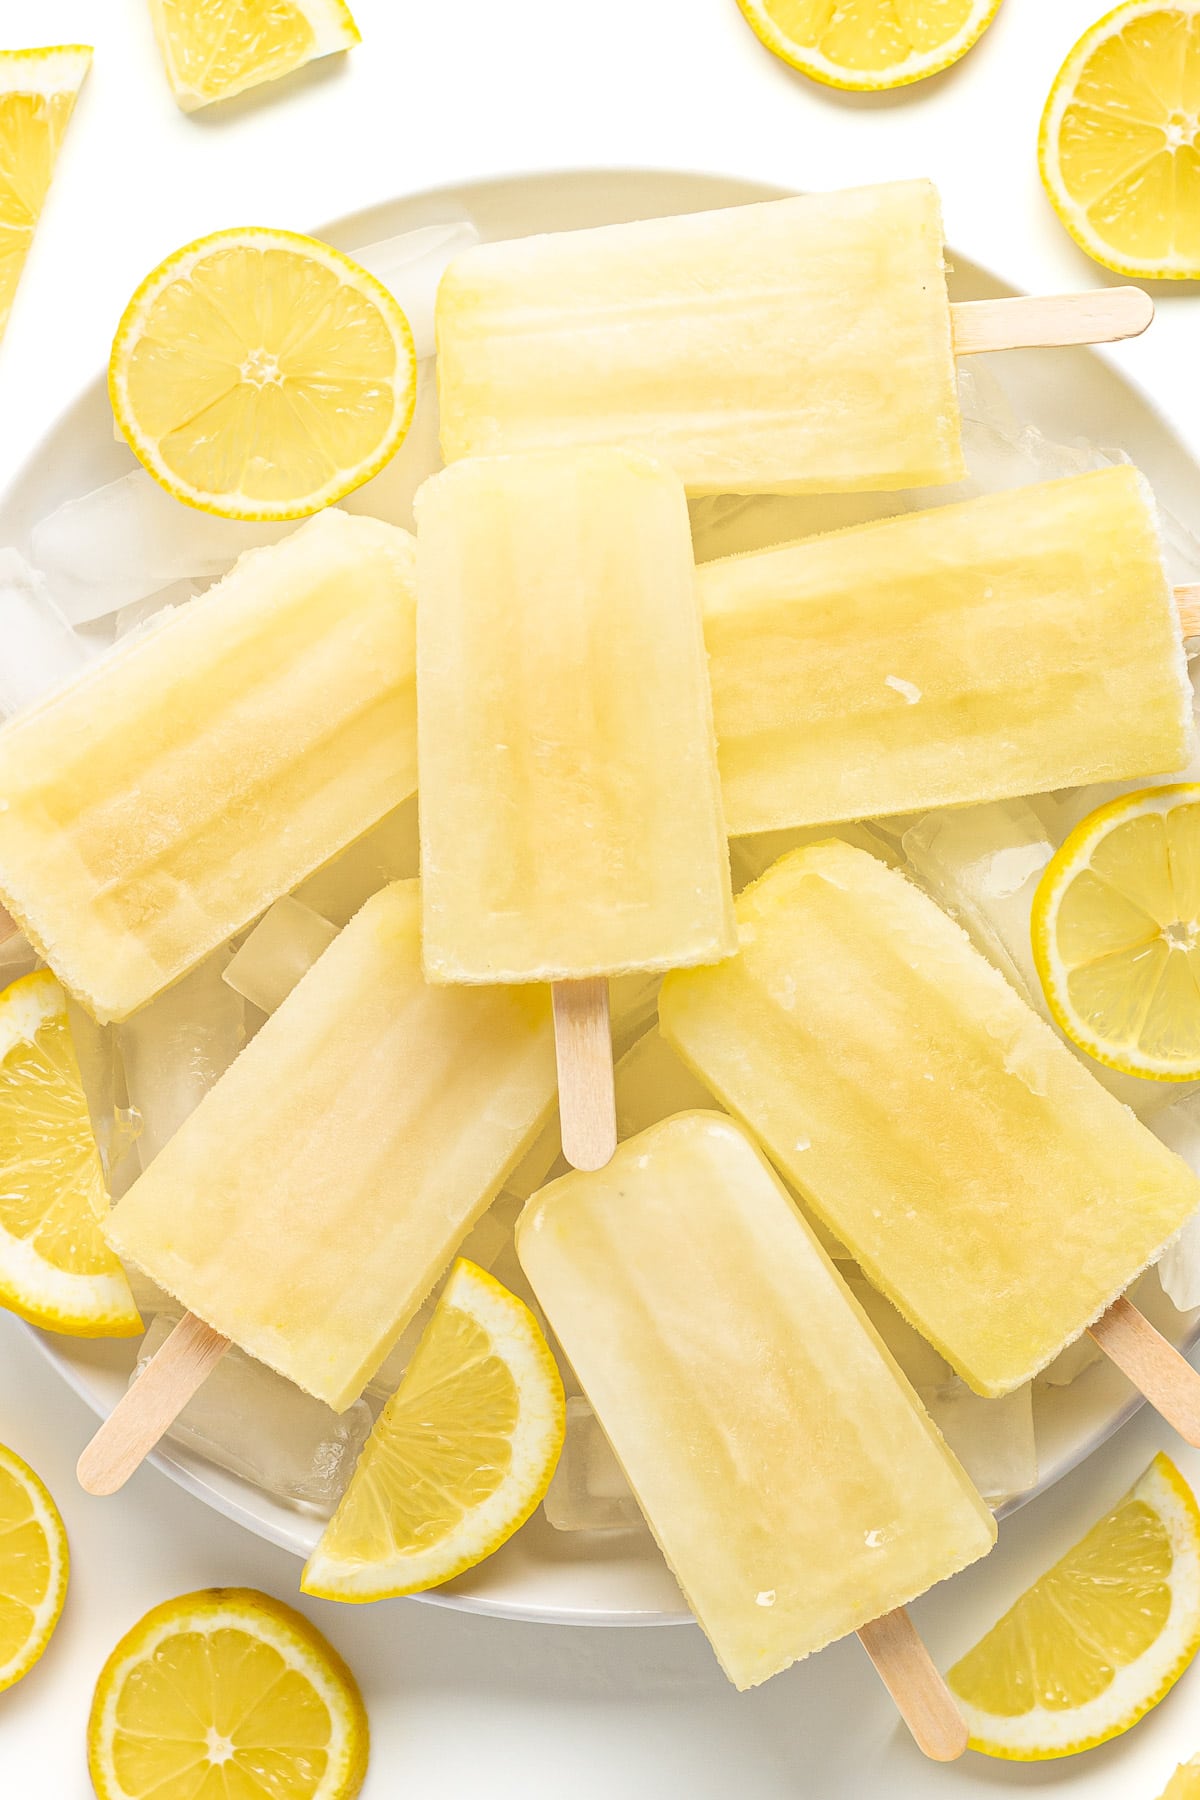 Plate of lemonade popsicles sitting on ice surrounded by sliced lemons.